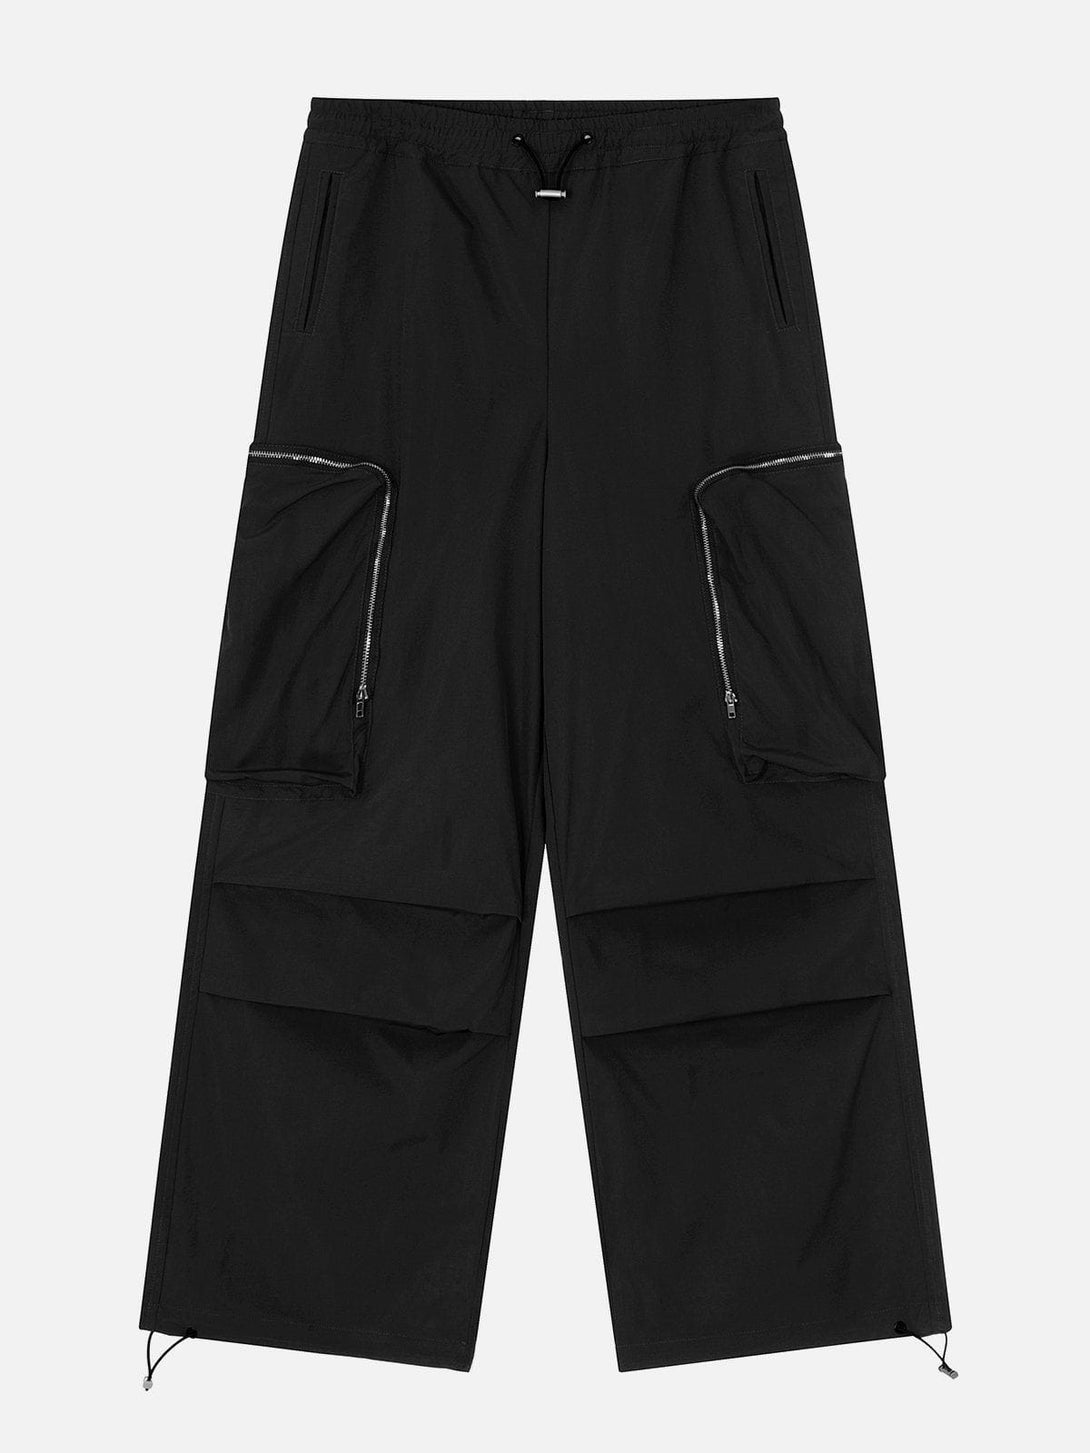 Levefly - Big Pockets Pants - Streetwear Fashion - levefly.com